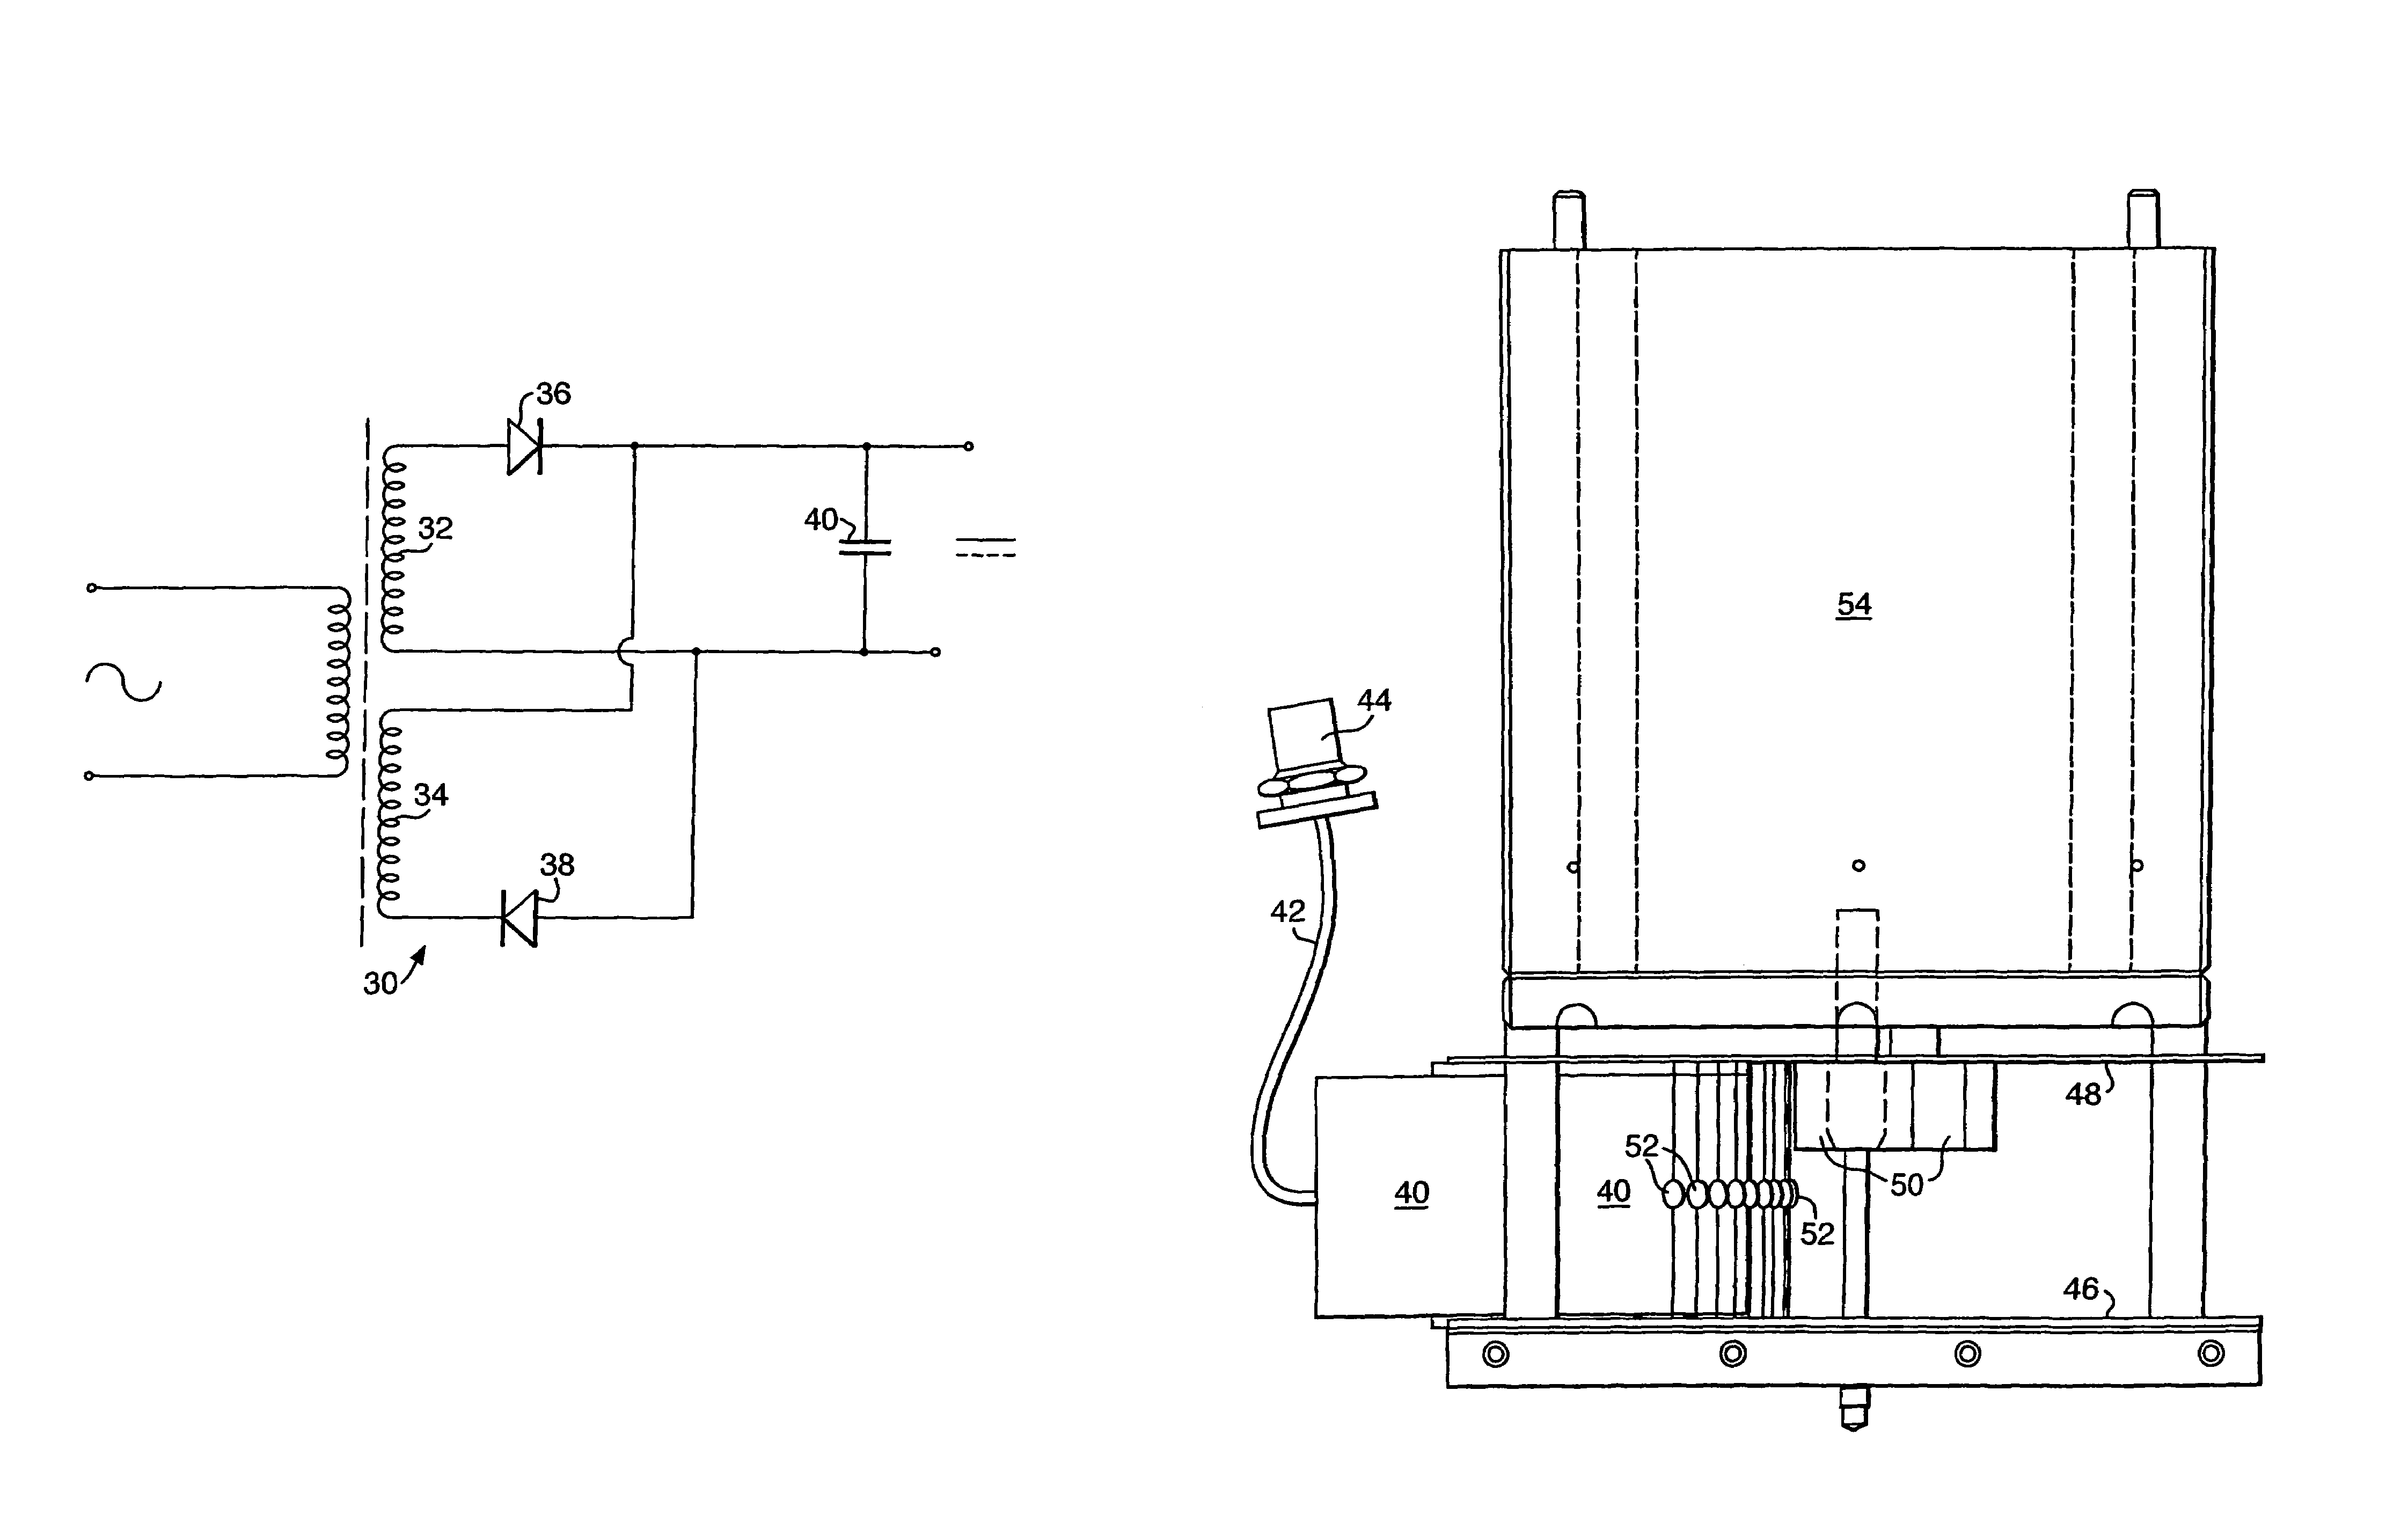 Transformer/rectifier arrangement